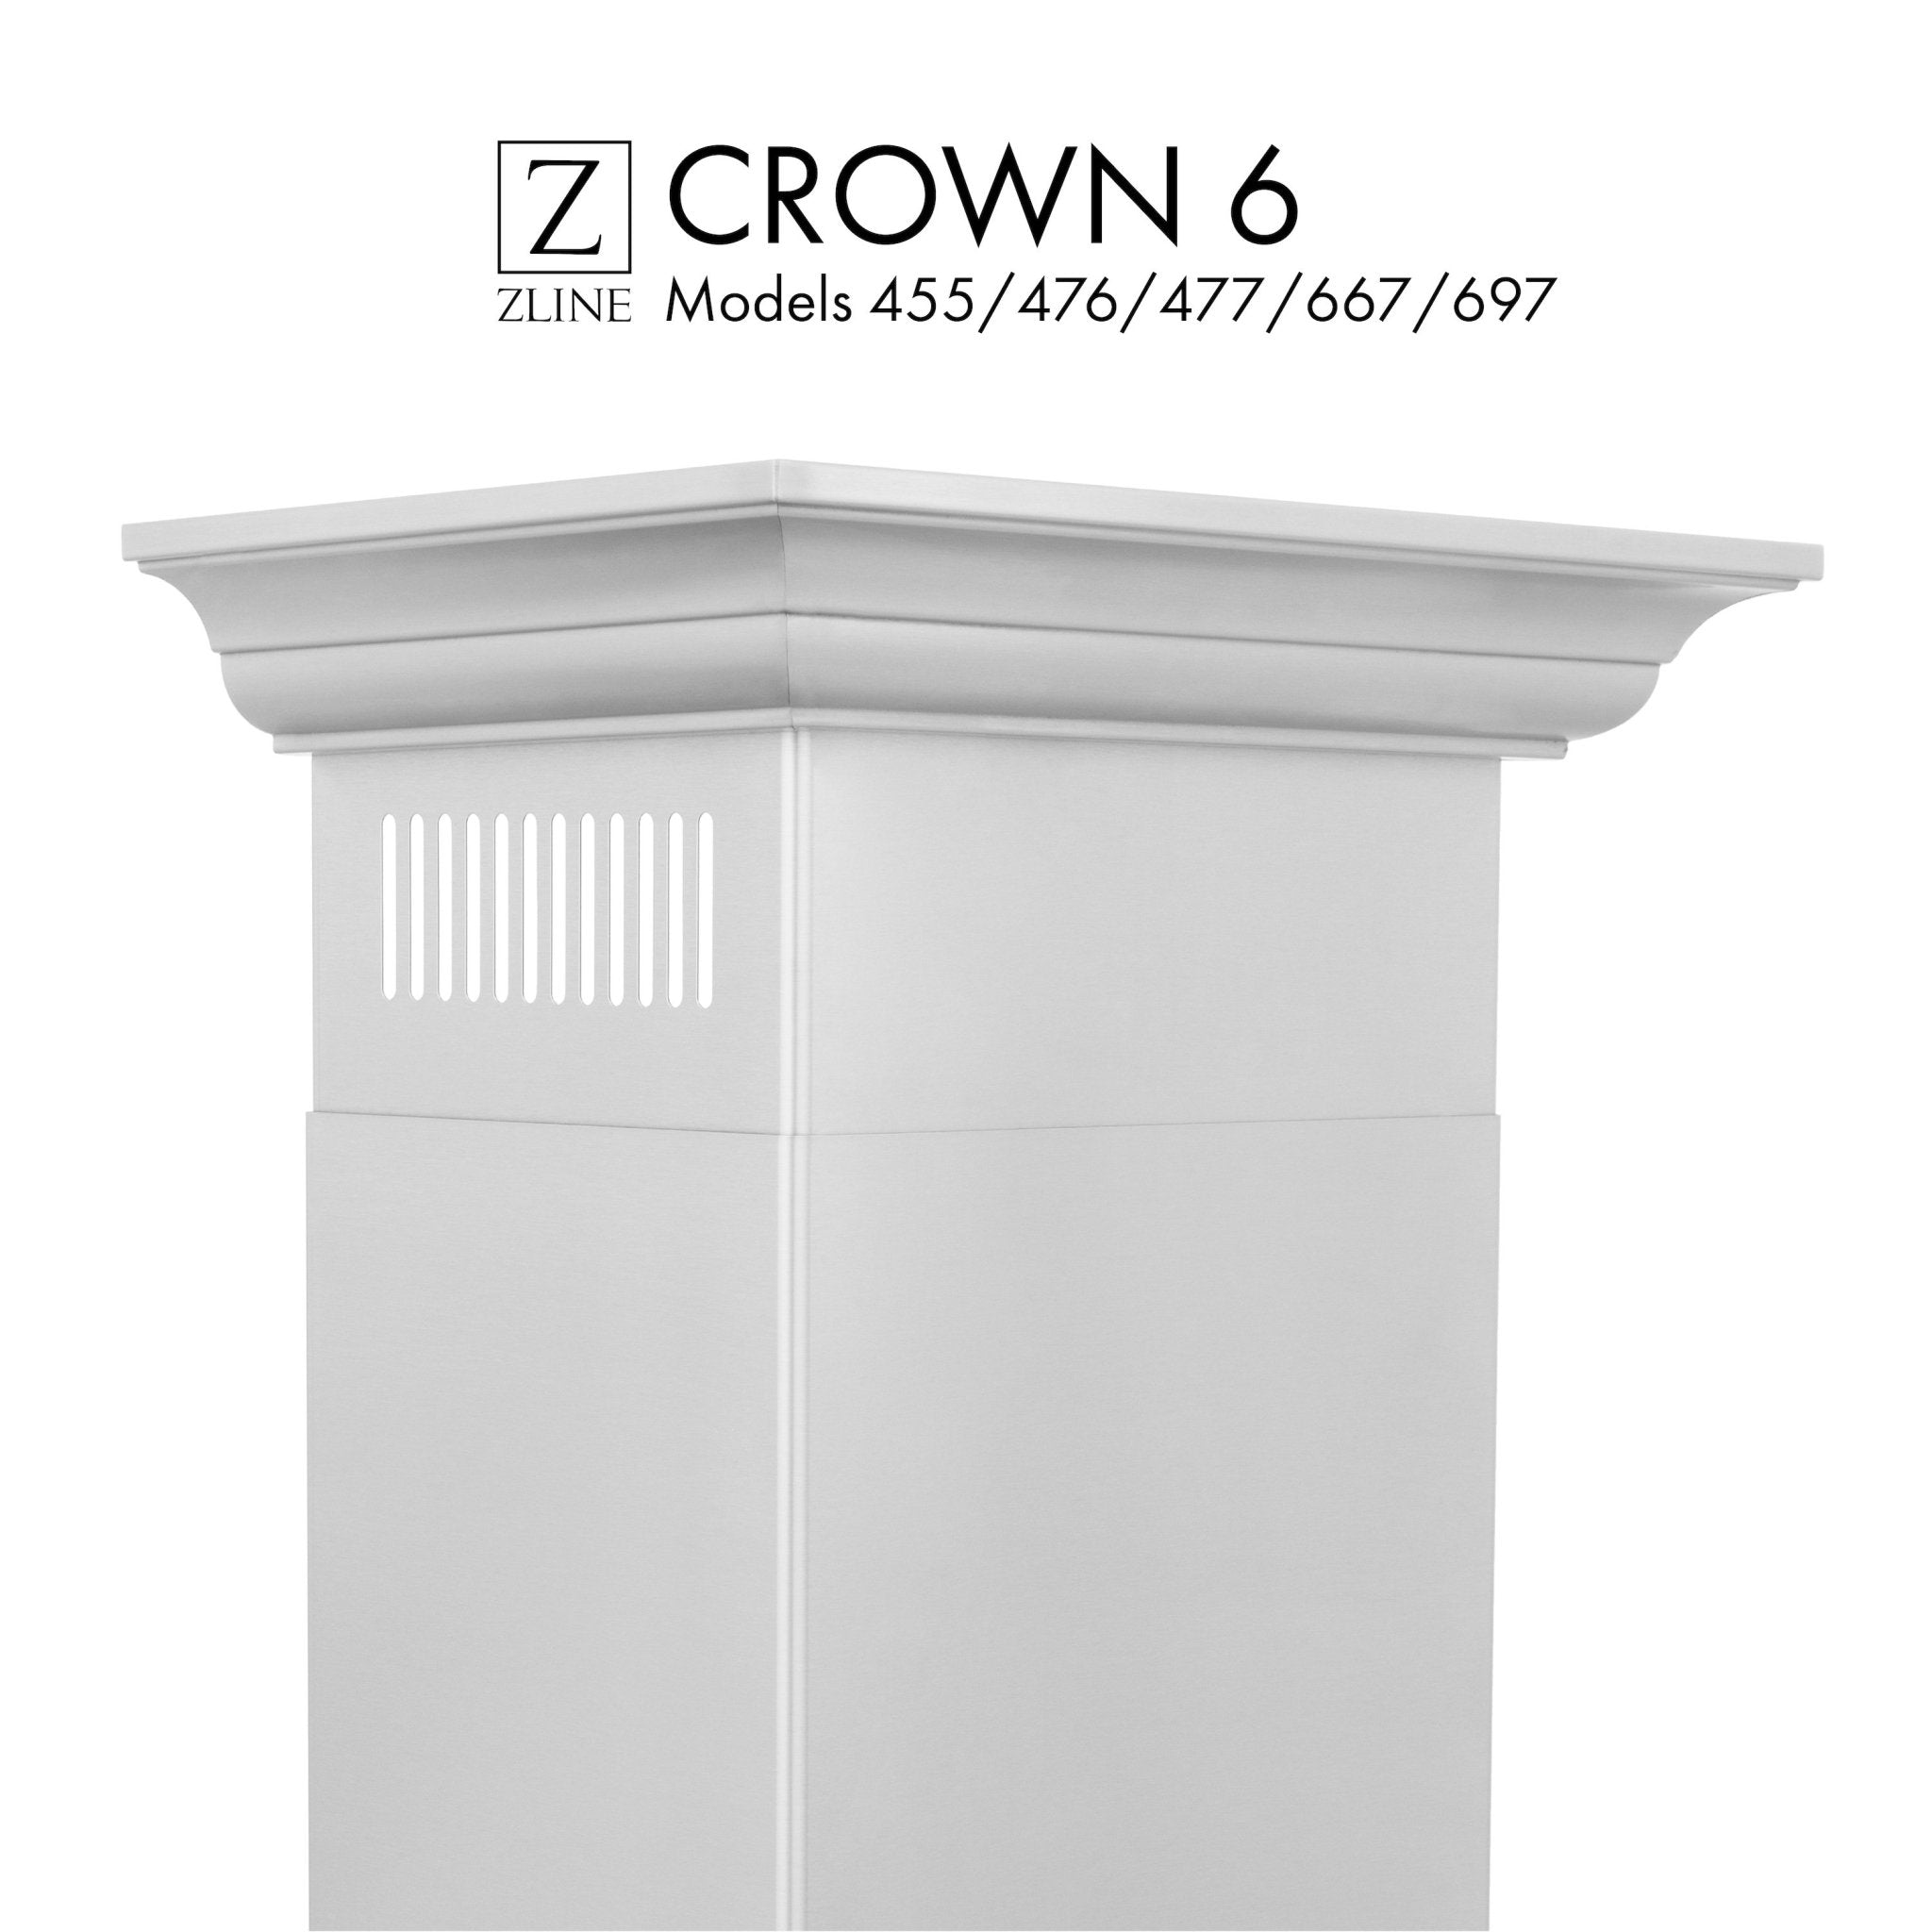 ZLINE Crown Molding 6 For 455/476/477/667/697 Wall Range Hood Stainless Steel (CM6-455/476/477/667/697) - Rustic Kitchen & Bath - Range Hood Accessories - ZLINE Kitchen and Bath